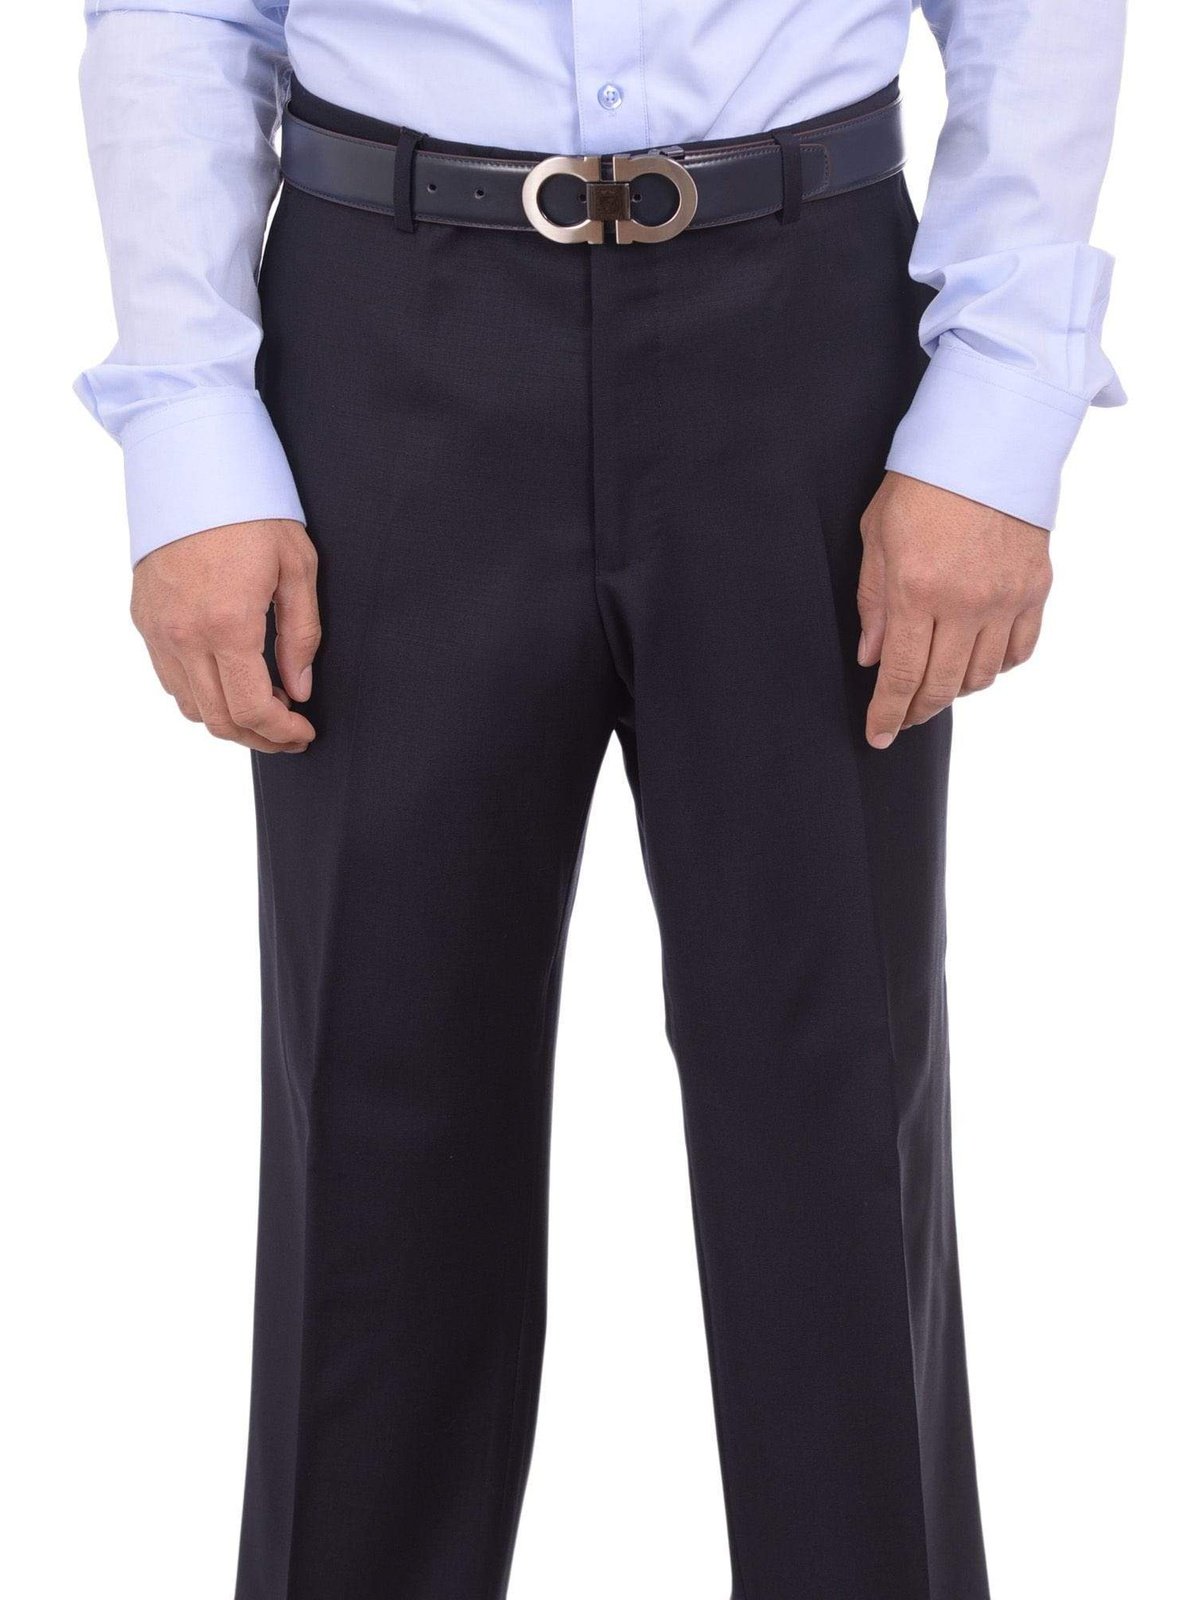 Bartorelli PANTS Mens Napoli Extra Slim Fit Solid Navy Blue Super 150s Wool Cashmere Dress Pants